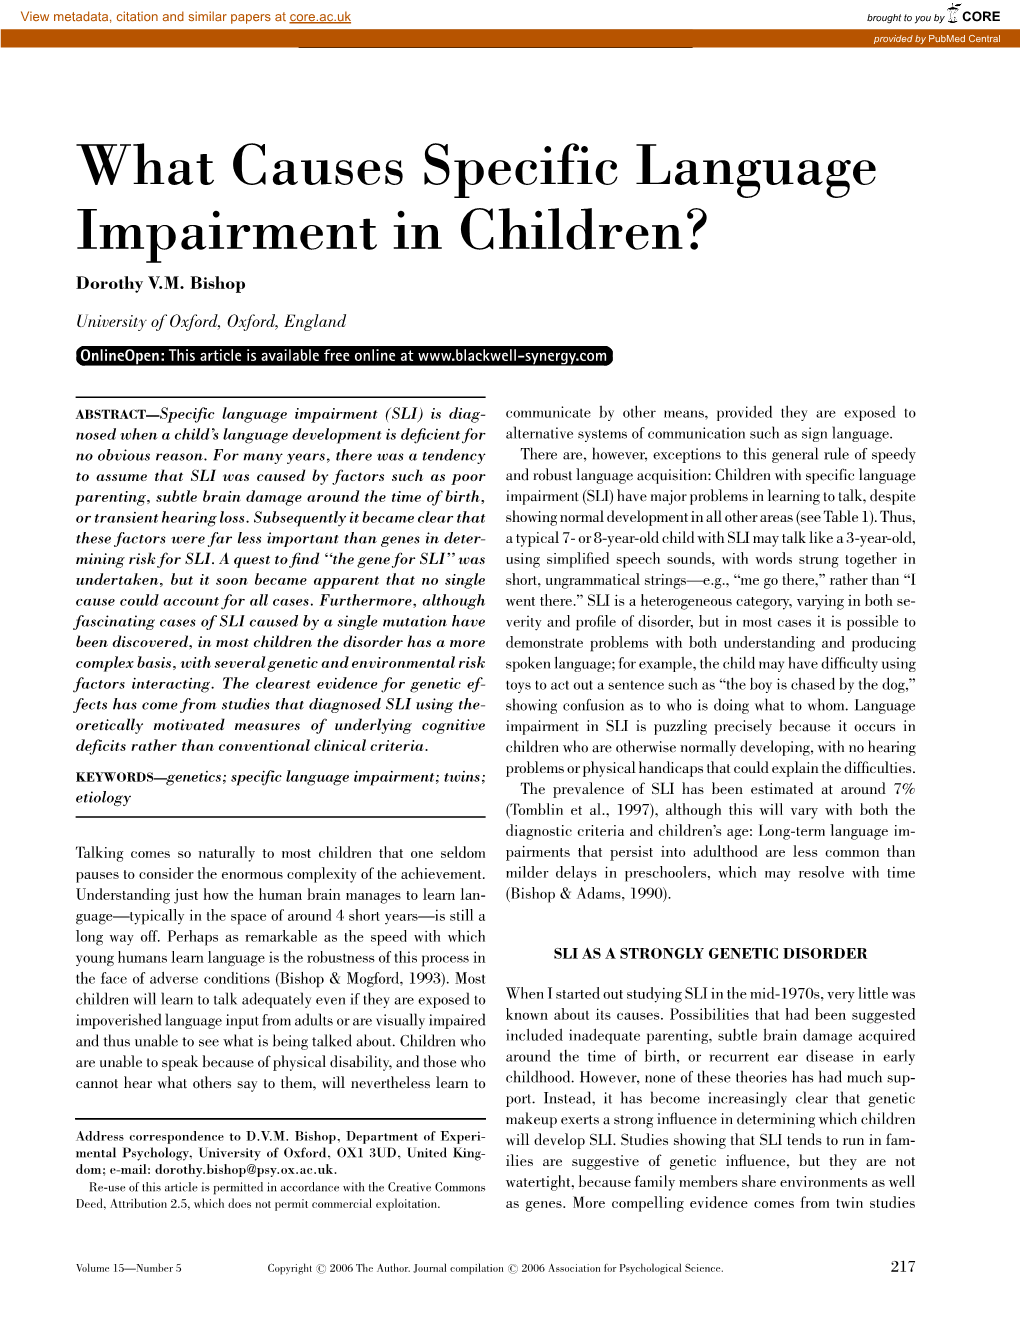 What Causes Specific Language Impairment in Children? Dorothy V.M